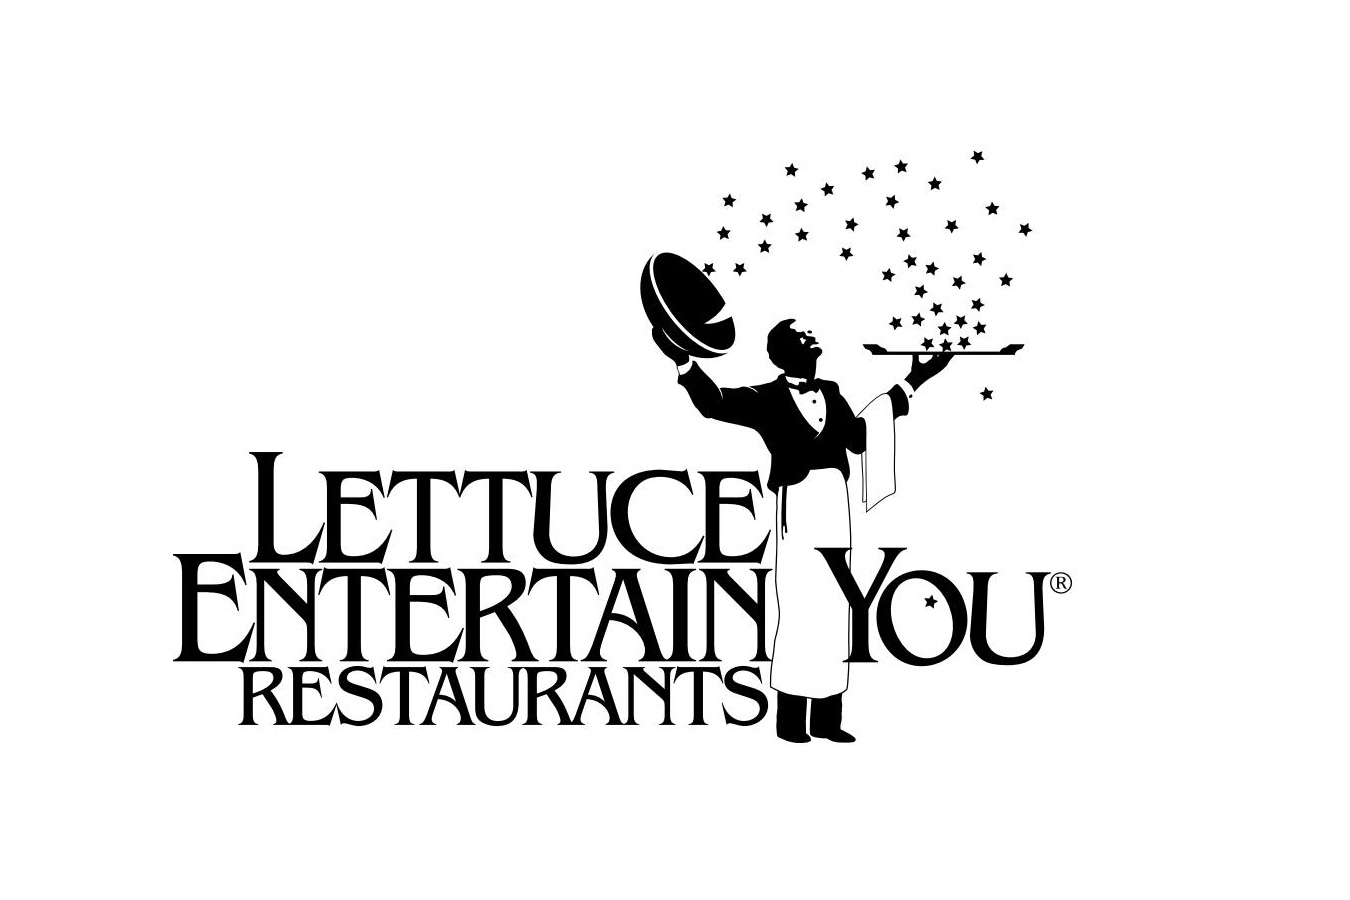 Lettuce Entertain You